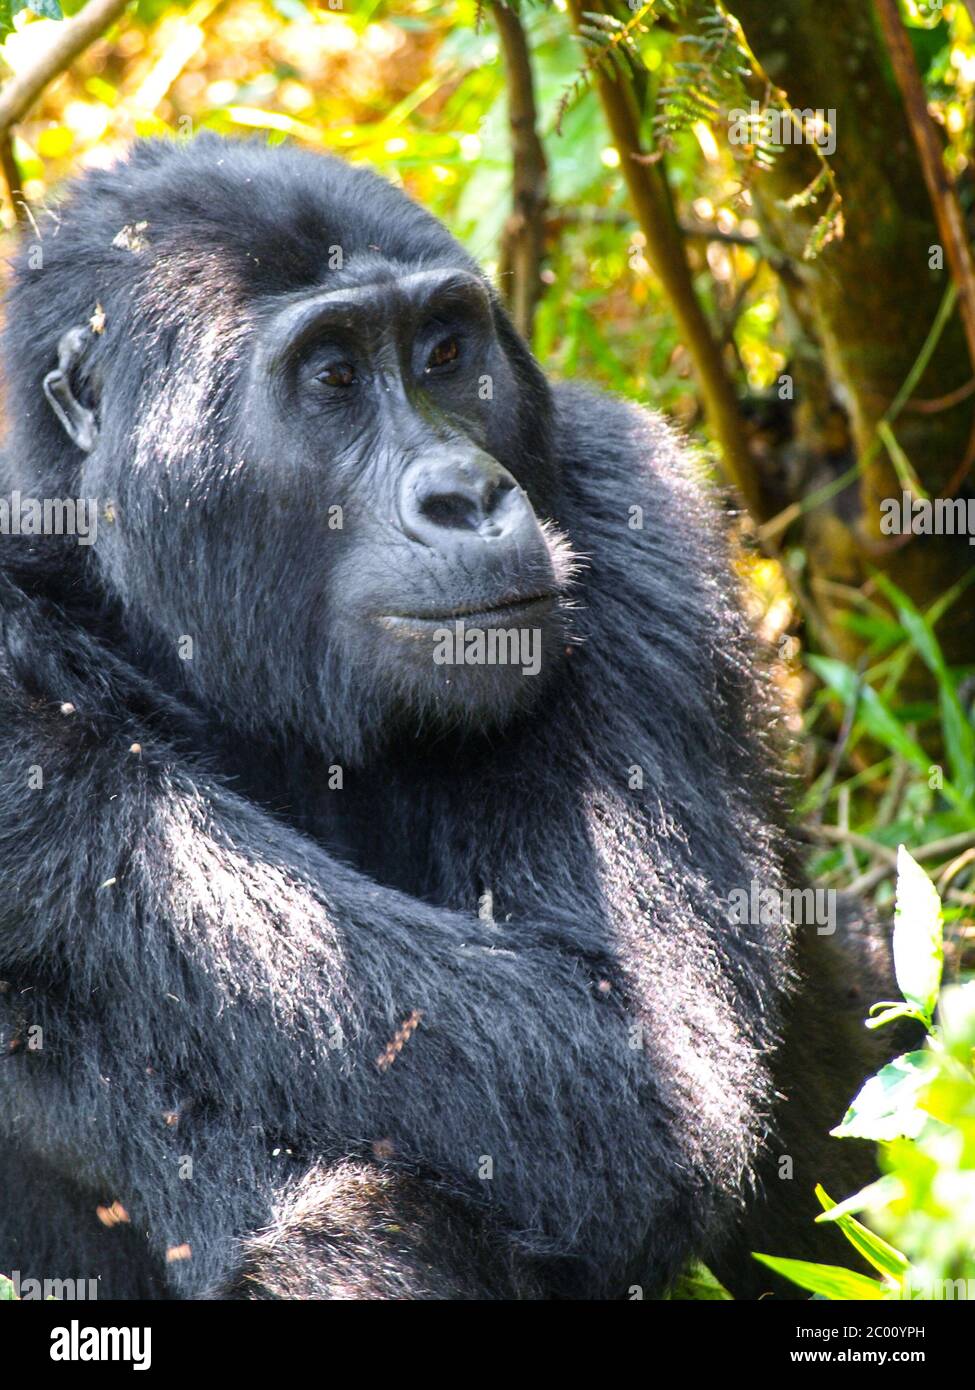 Portrait of adult female eastern gorilla, Gorilla beringei, in natural habitat. Critically endangered primate. Green jungle forests of Bwindi Impenetrable National Park, Uganda, Africa. Stock Photo